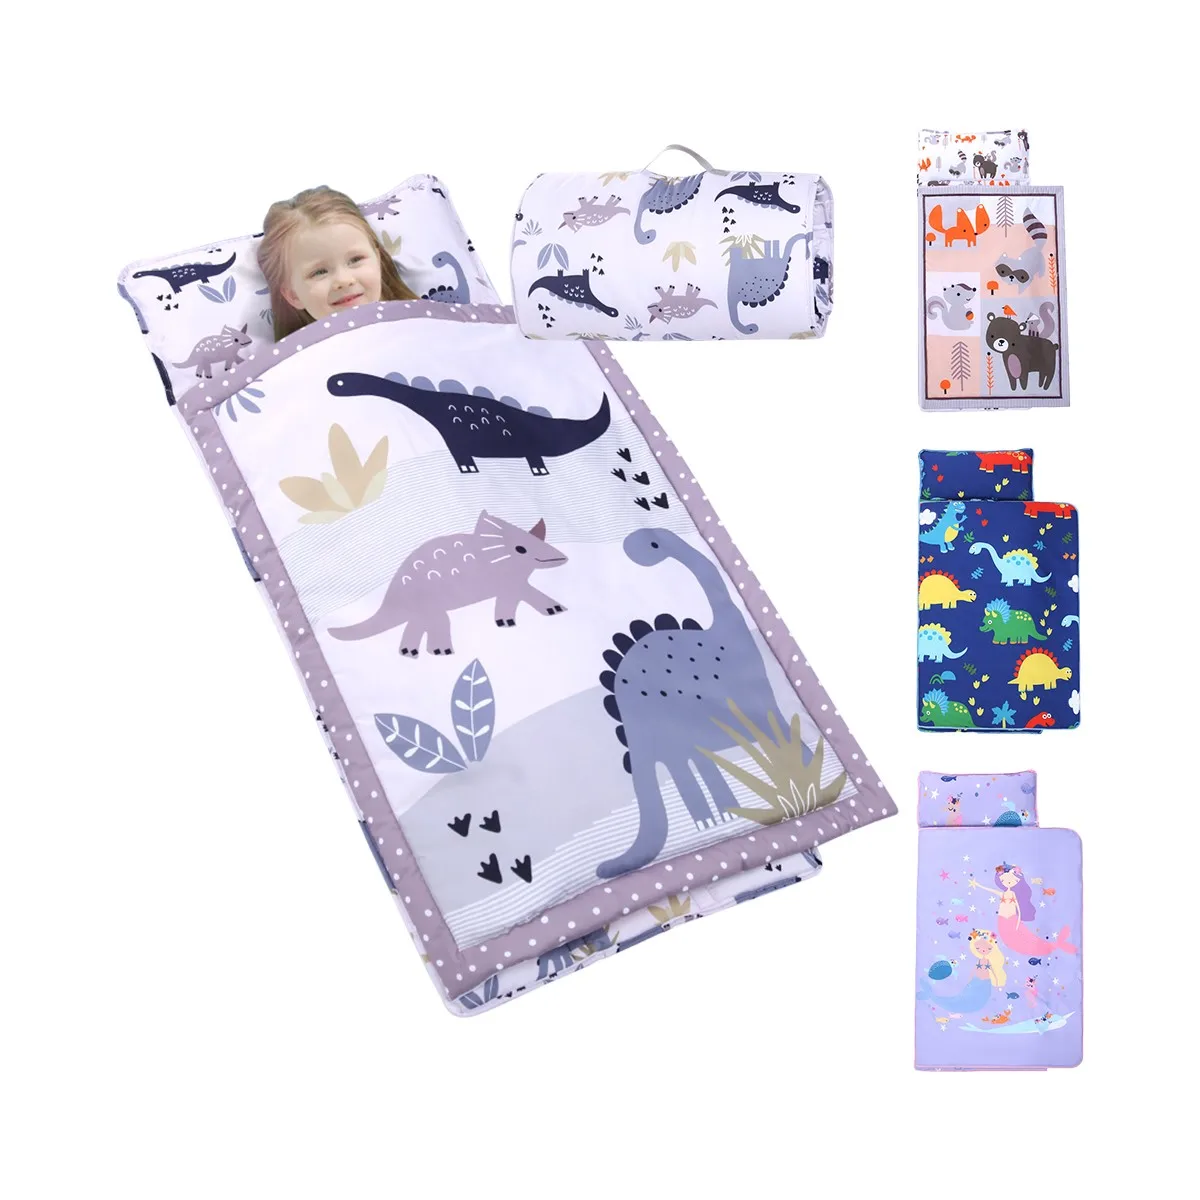 

Stock & Custom Unisex Kid Travel Sleeping Bag Soft Microfiber Toddler Nap Mat